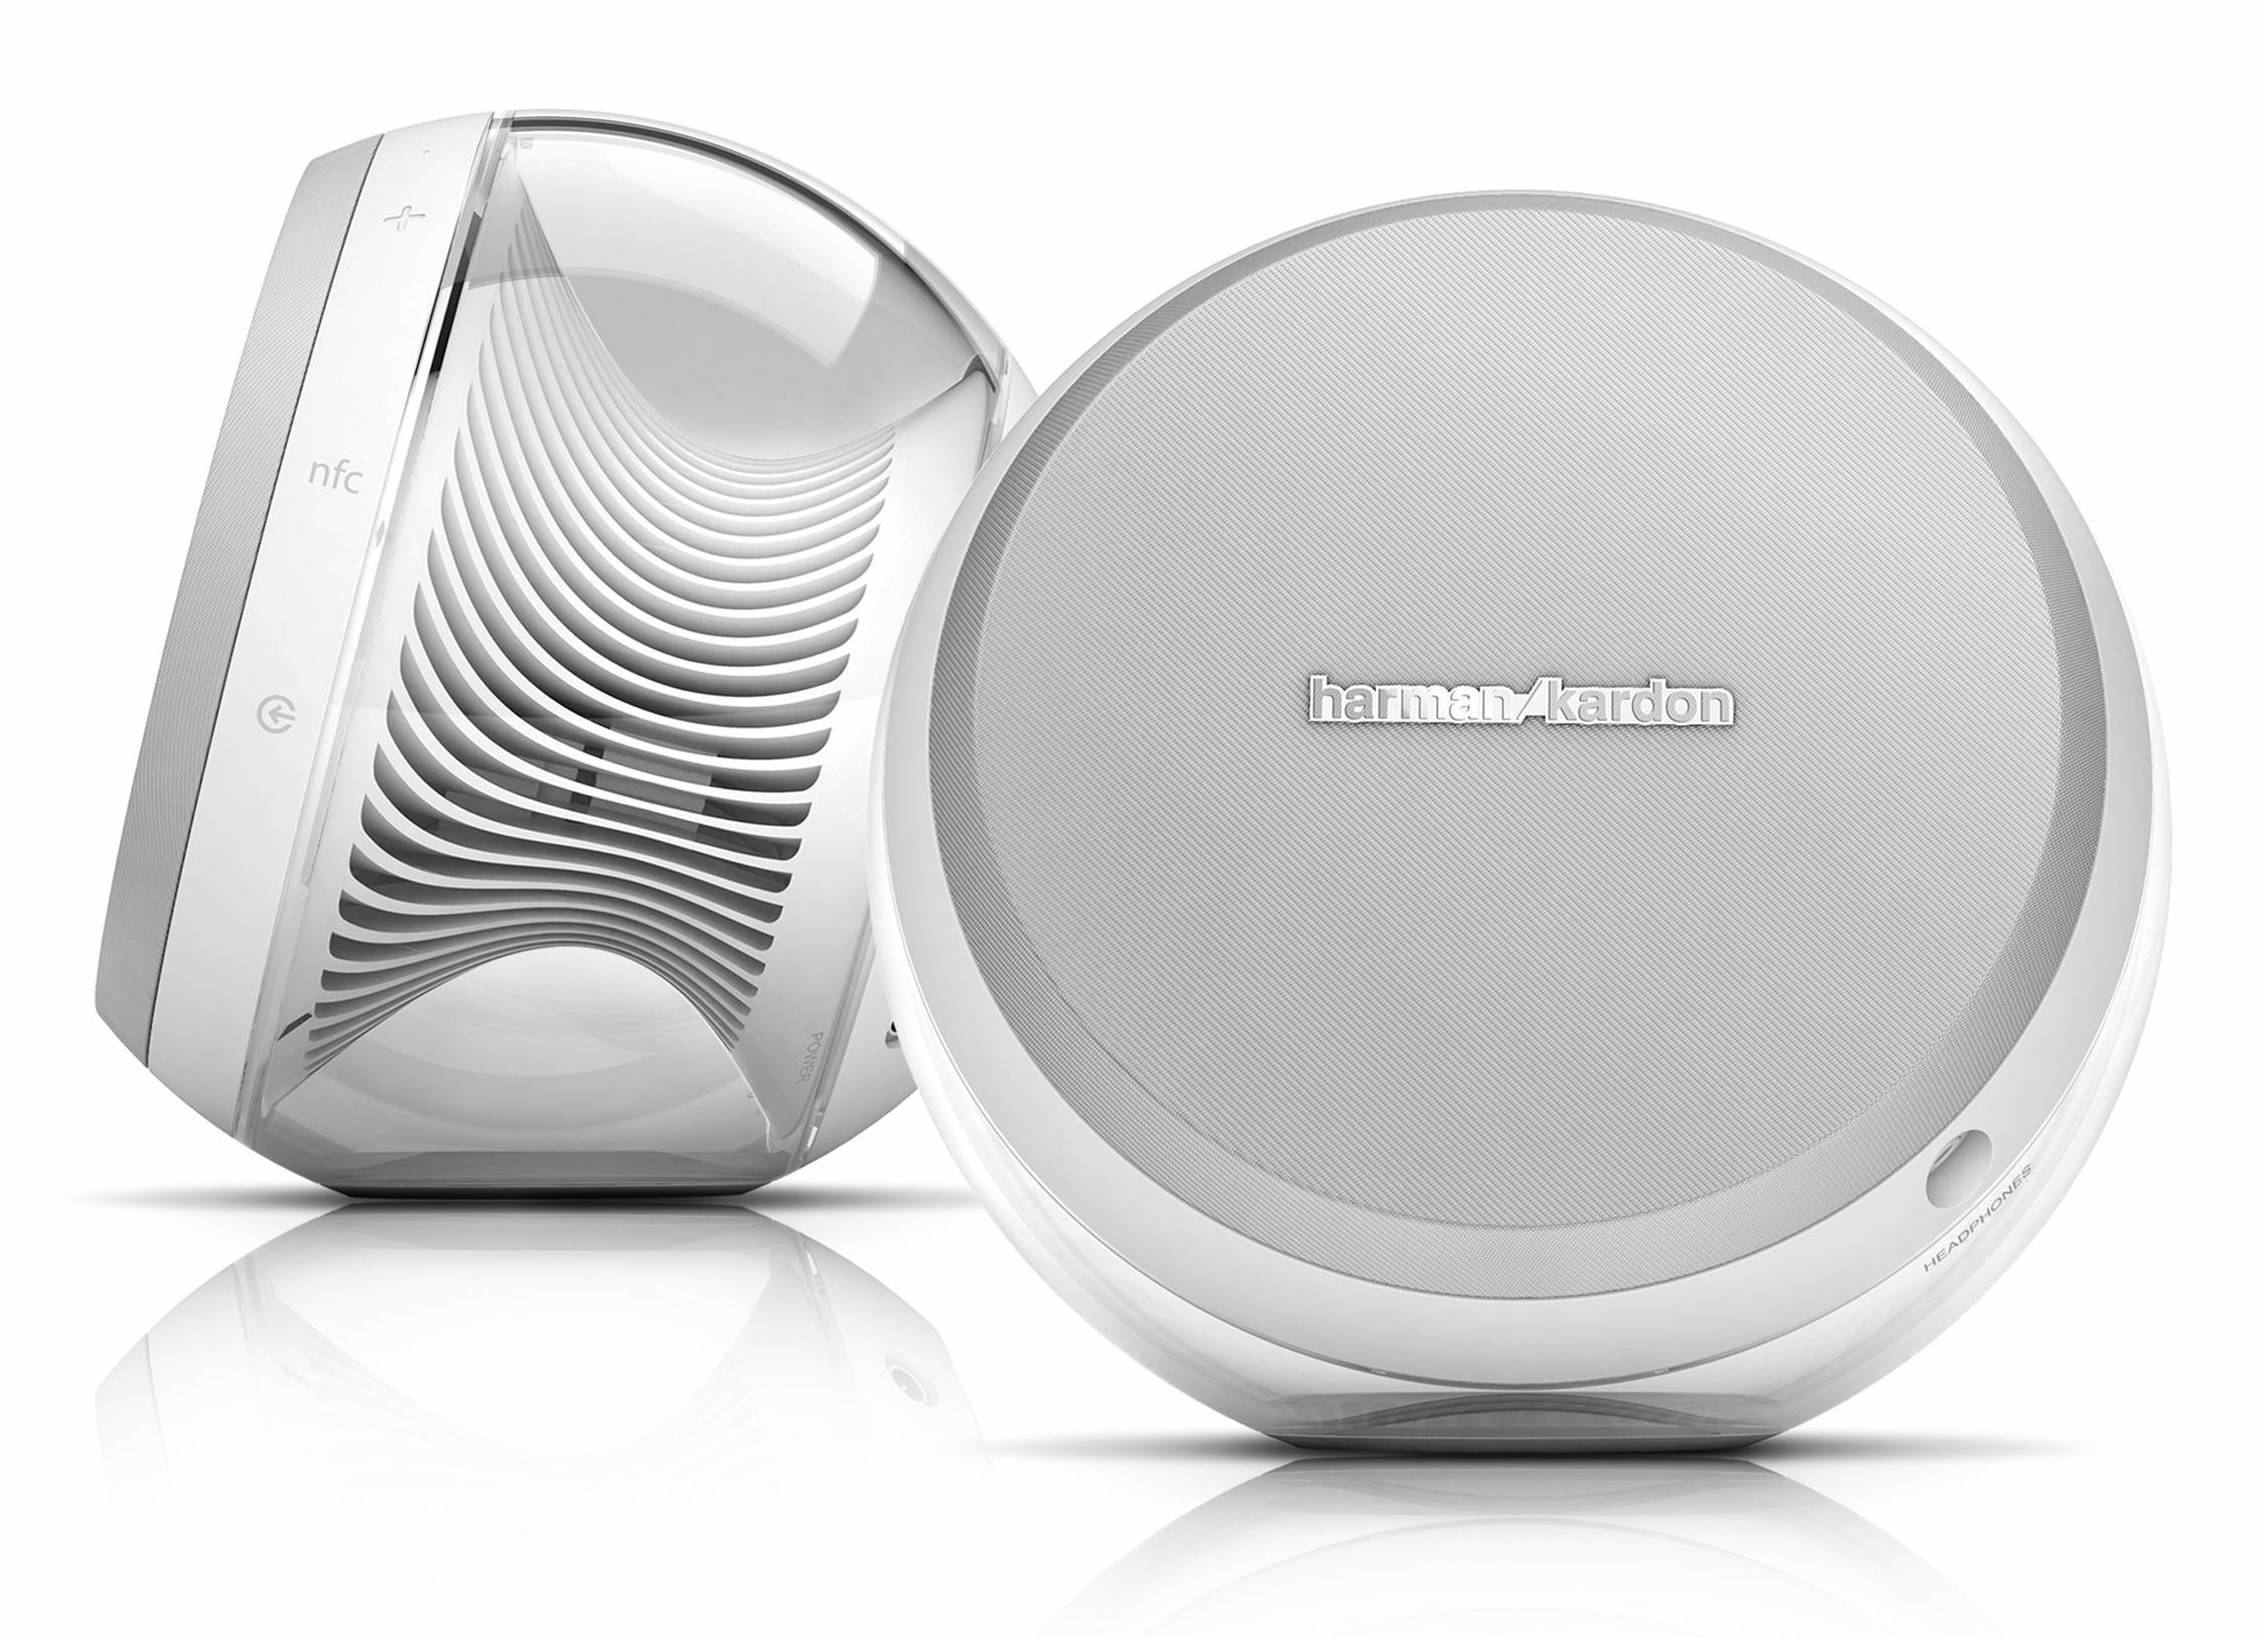 Harman Kardon Bluetooth Stereo Speaker System $150 shipped (Orig.